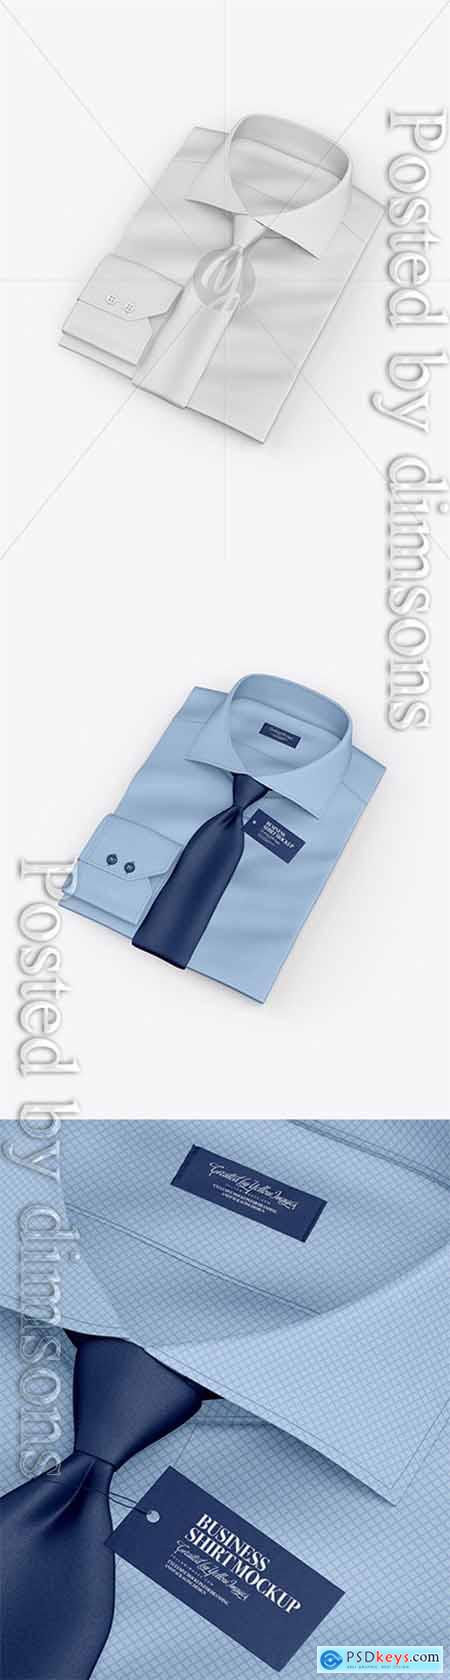 Folded Shirt With Tie Mockup - Half Side View (High-Angle Shot)